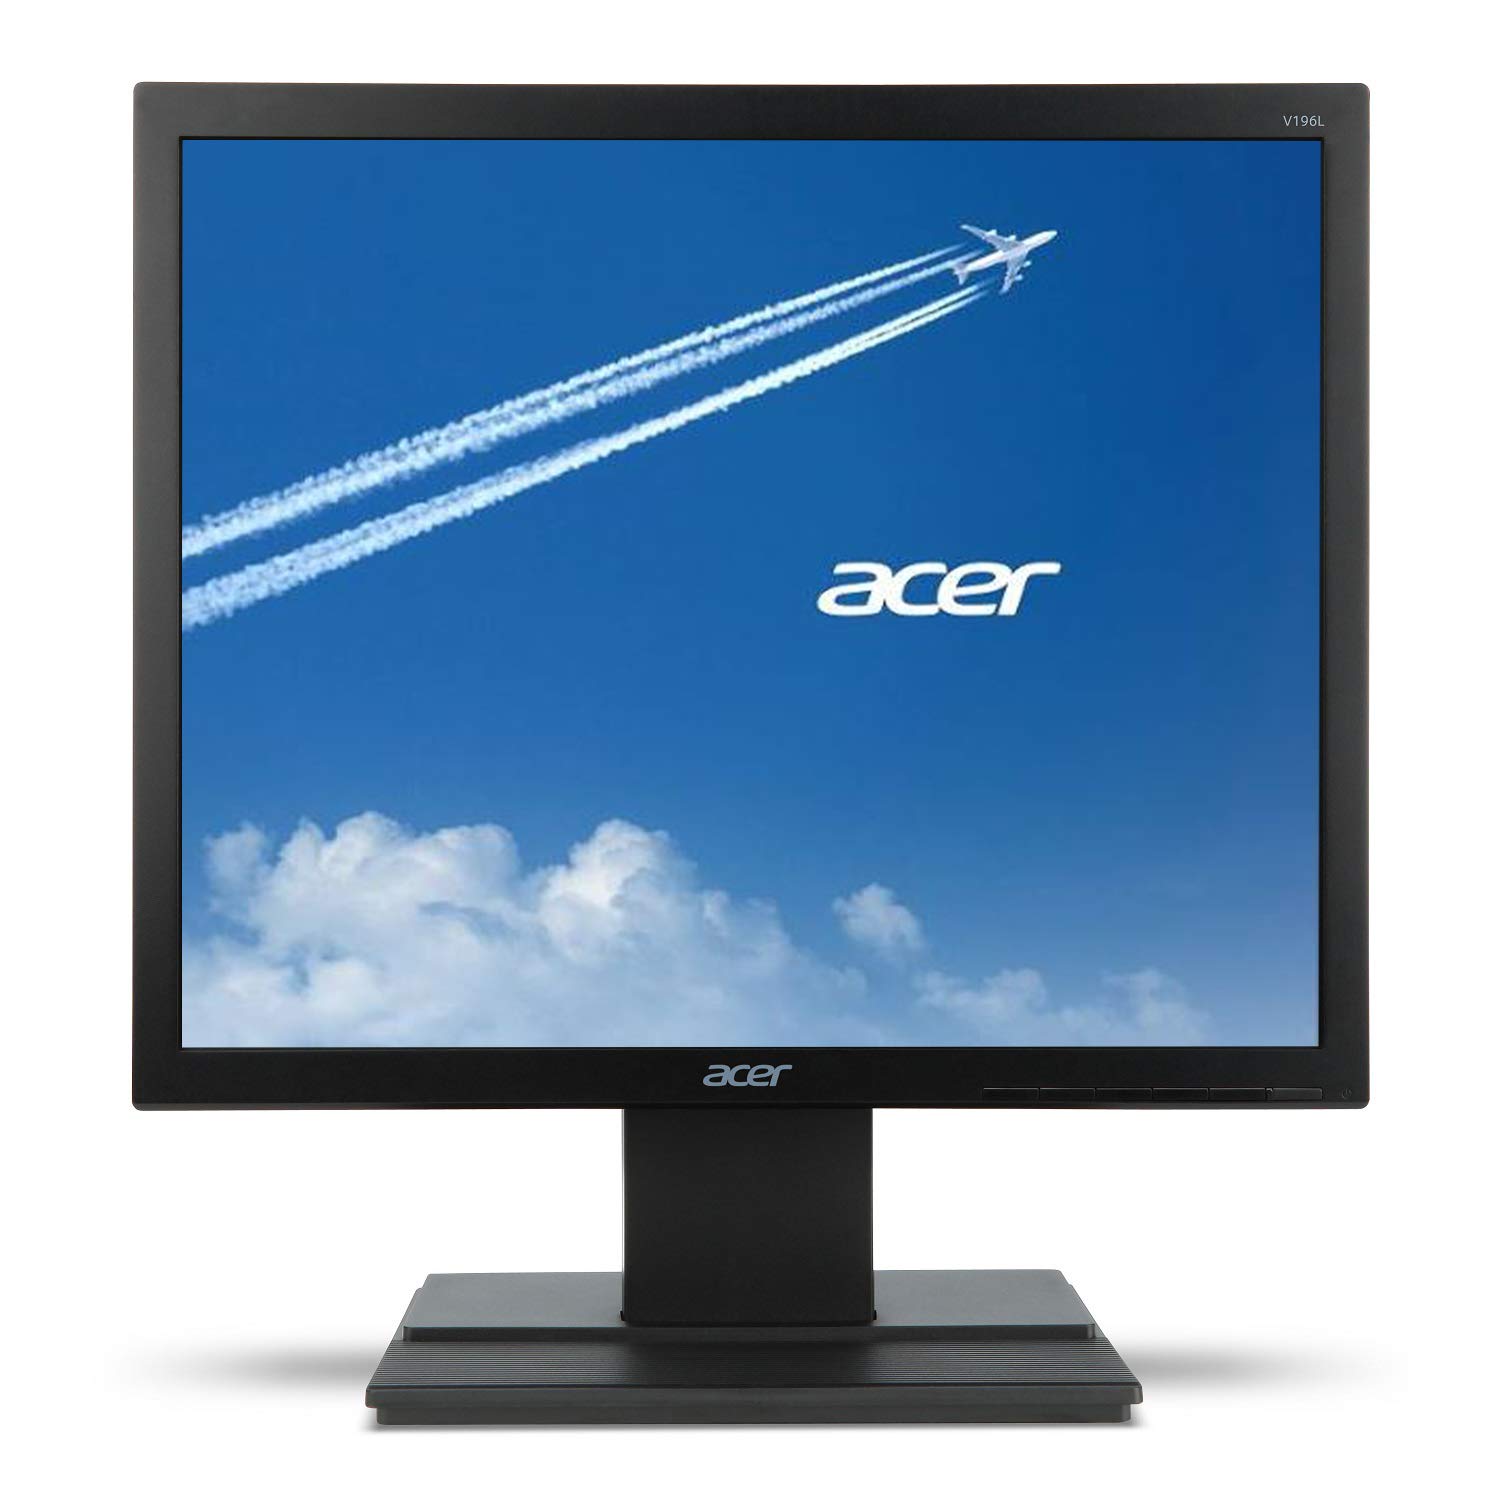 Acer V196L Bb 19' HD(1280 x 1024) IPS 모니터(VGA 포트)...